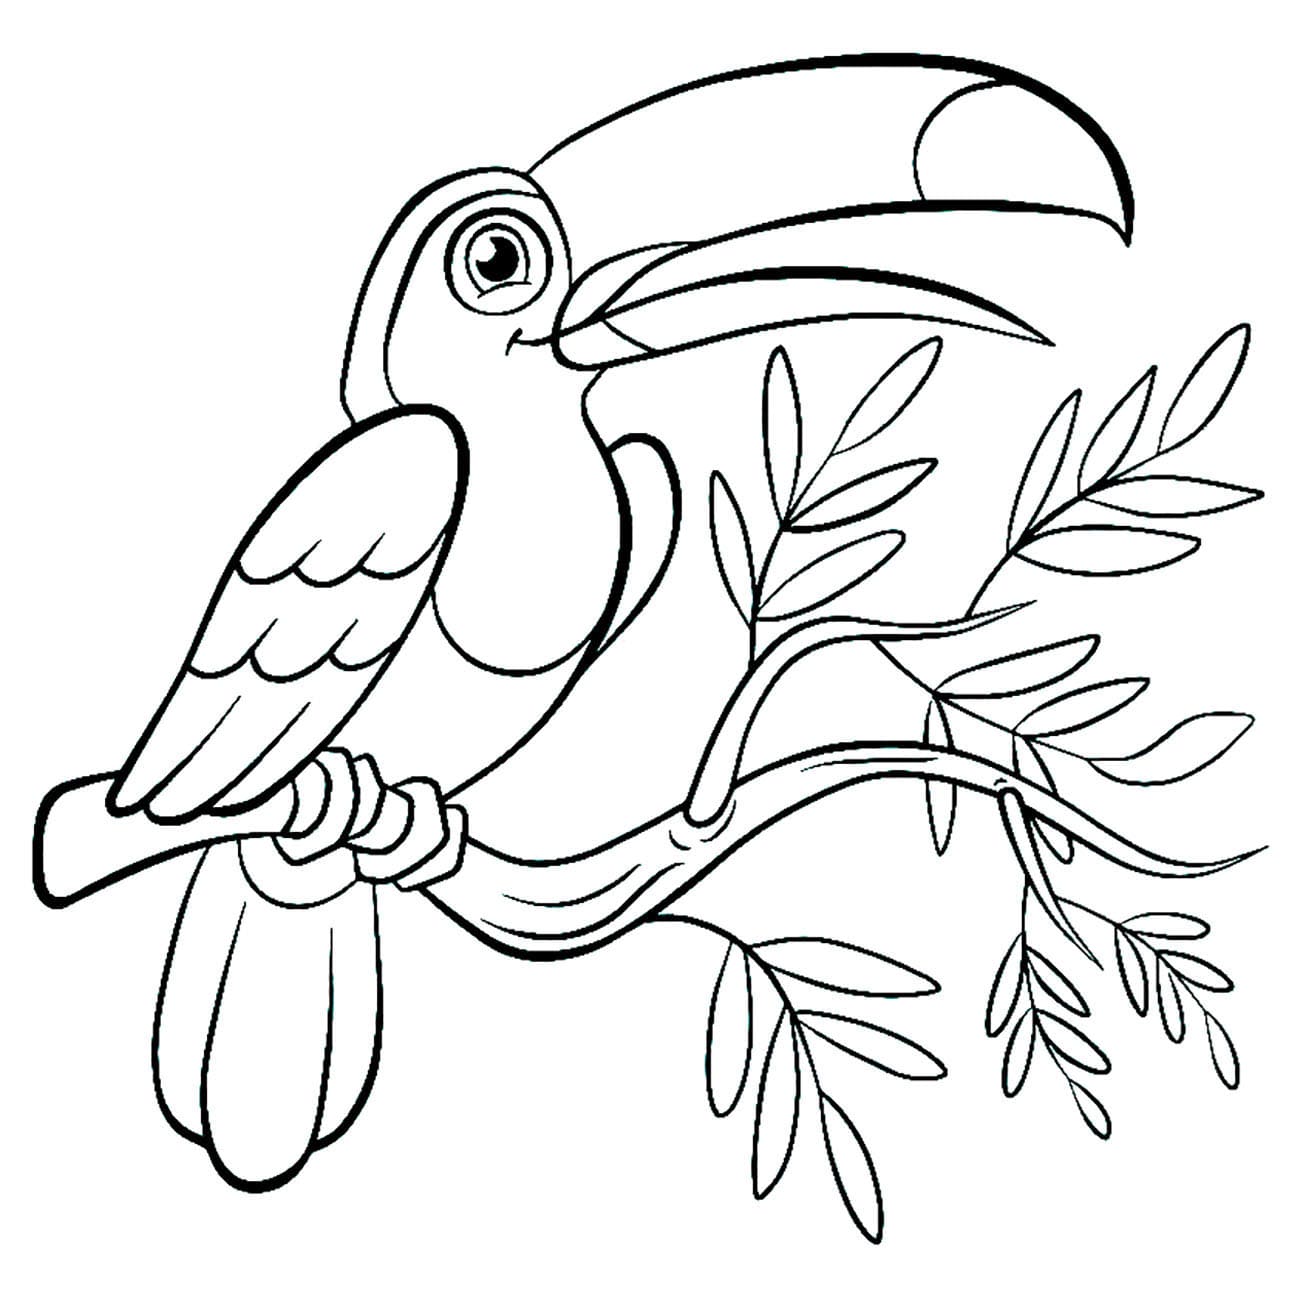 Desenhos de Imprimir contorno de imagem de tucano para colorir